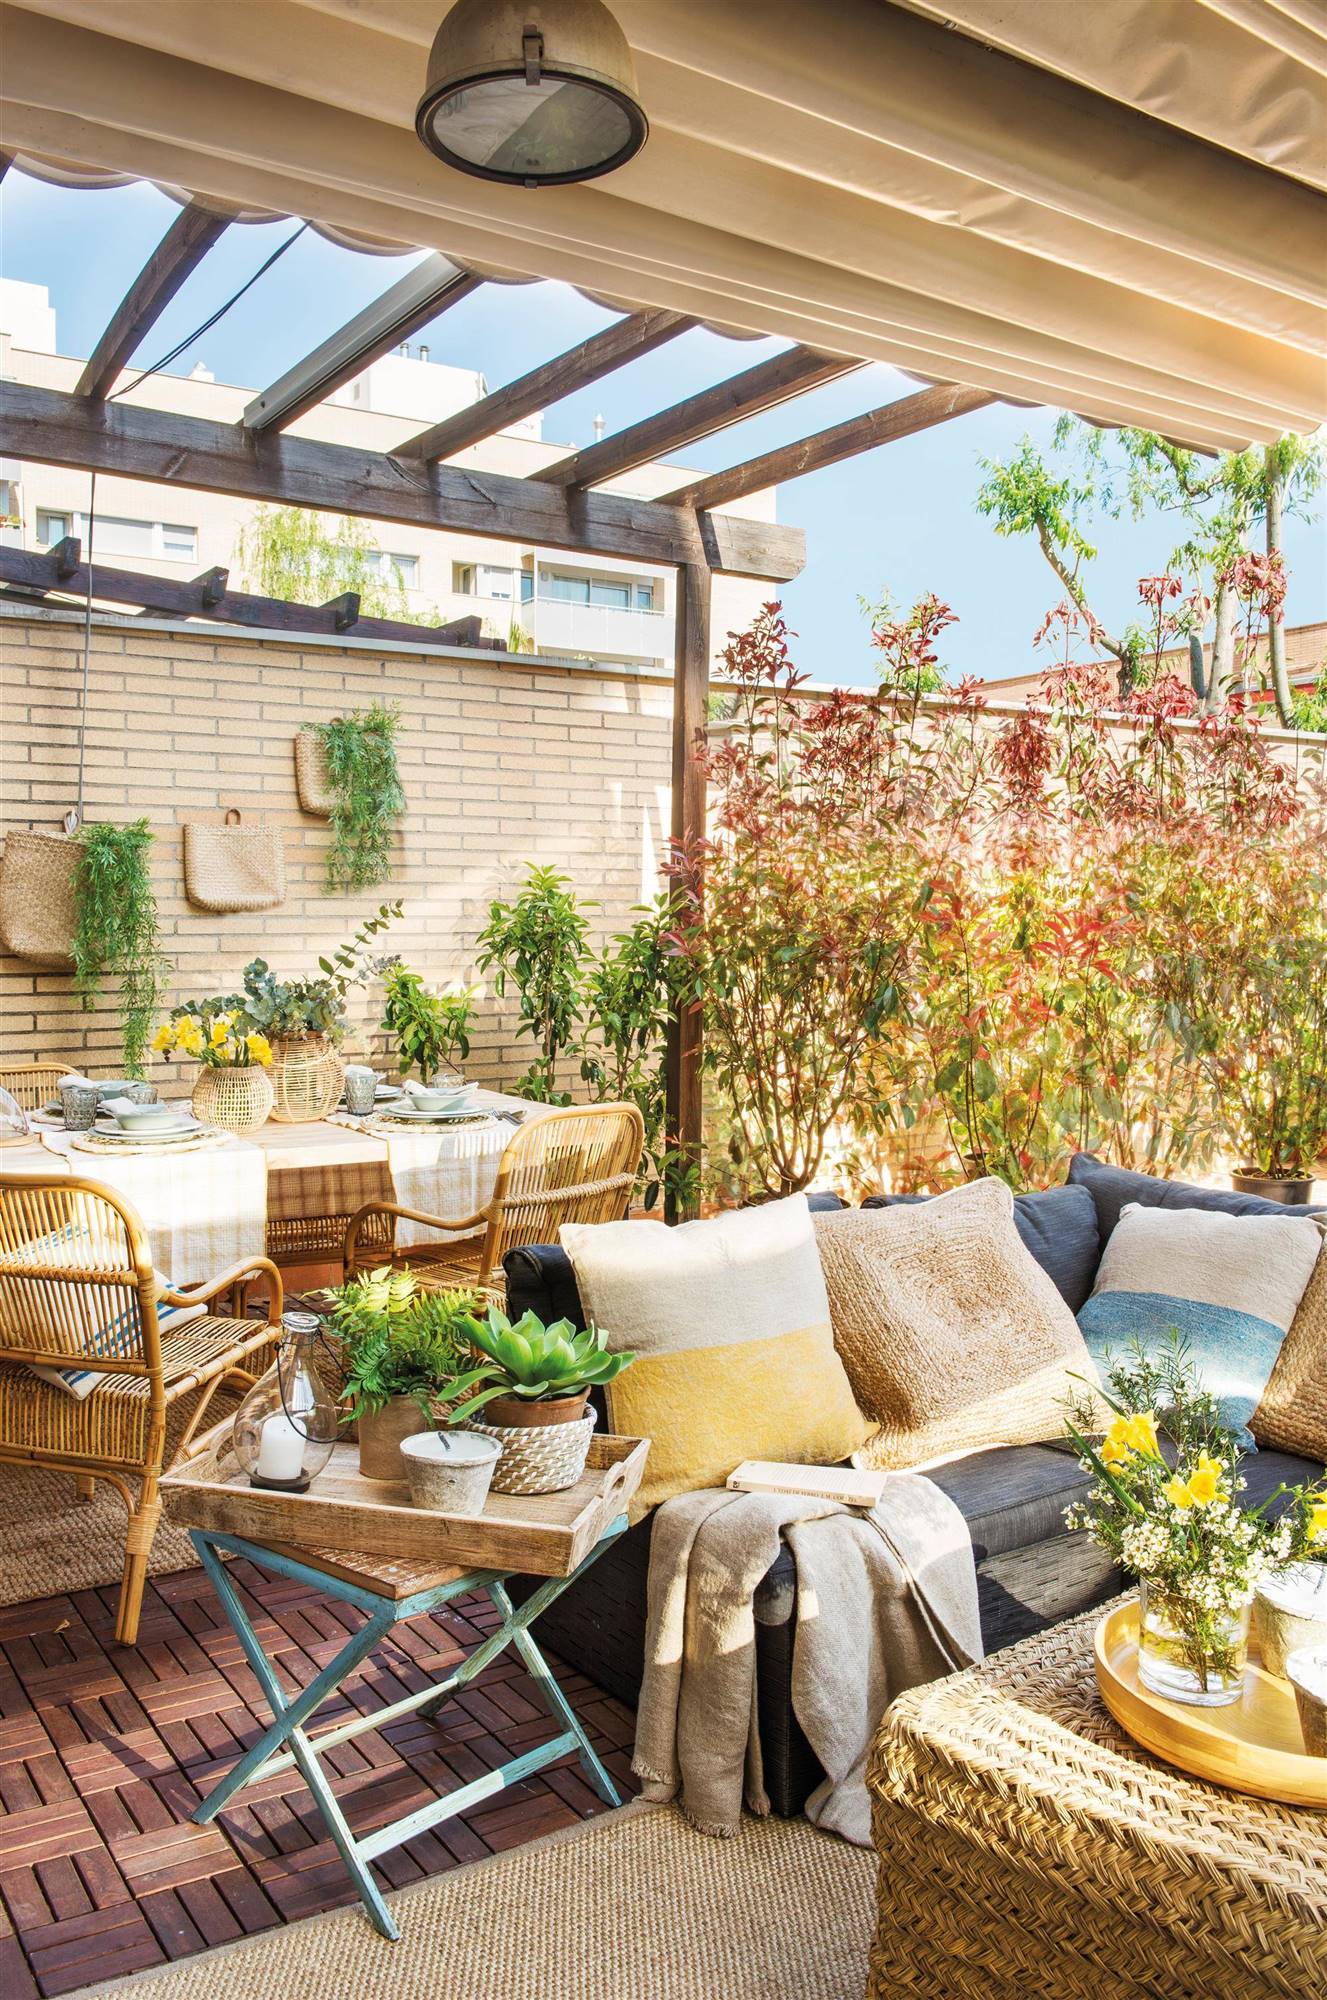 Terraza con asientos y comedor exterior decorado en tonos cálidos